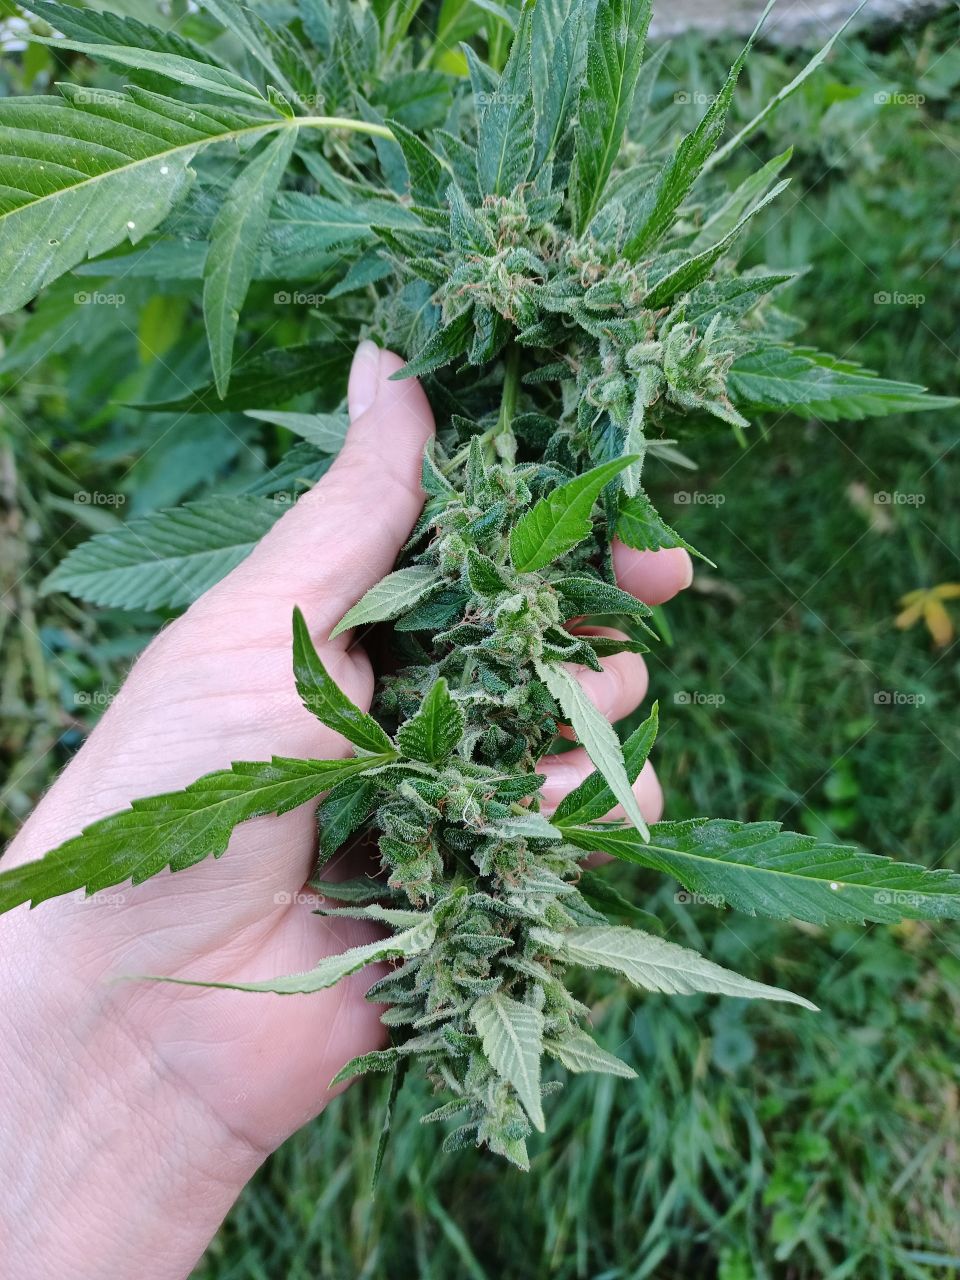 Seedy marijuana